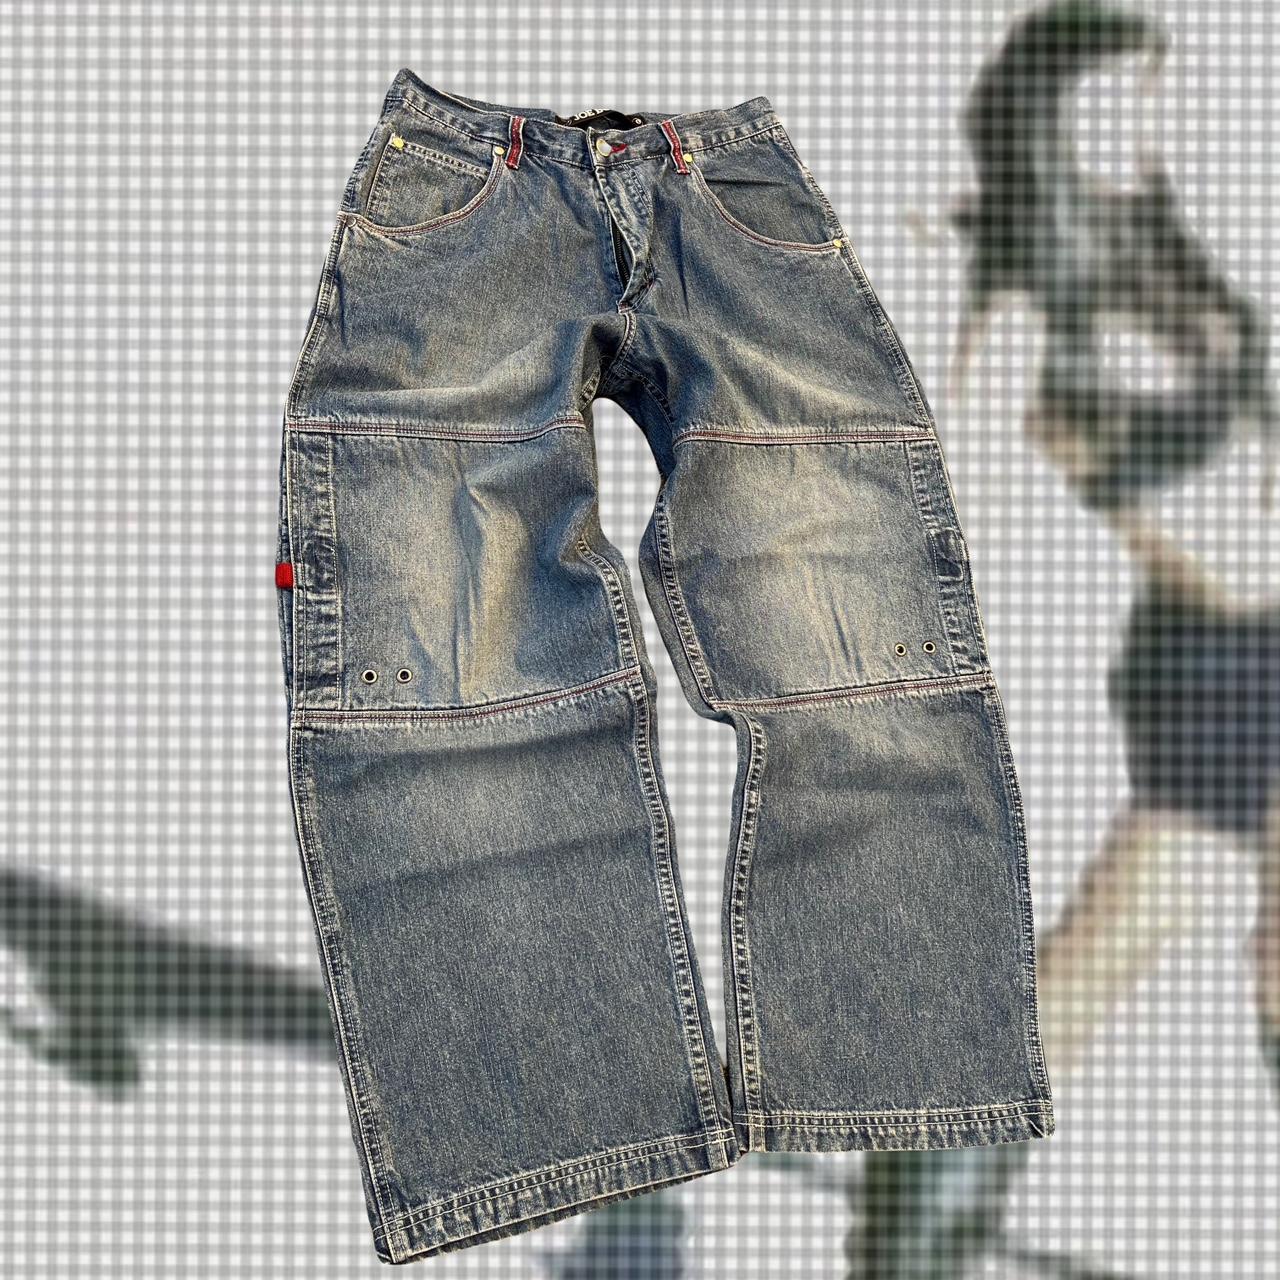 Nwt 2002 Joe Boxer Size 7 Juniors Kmart Fashion Denim Jeans Retro Old New  Stock